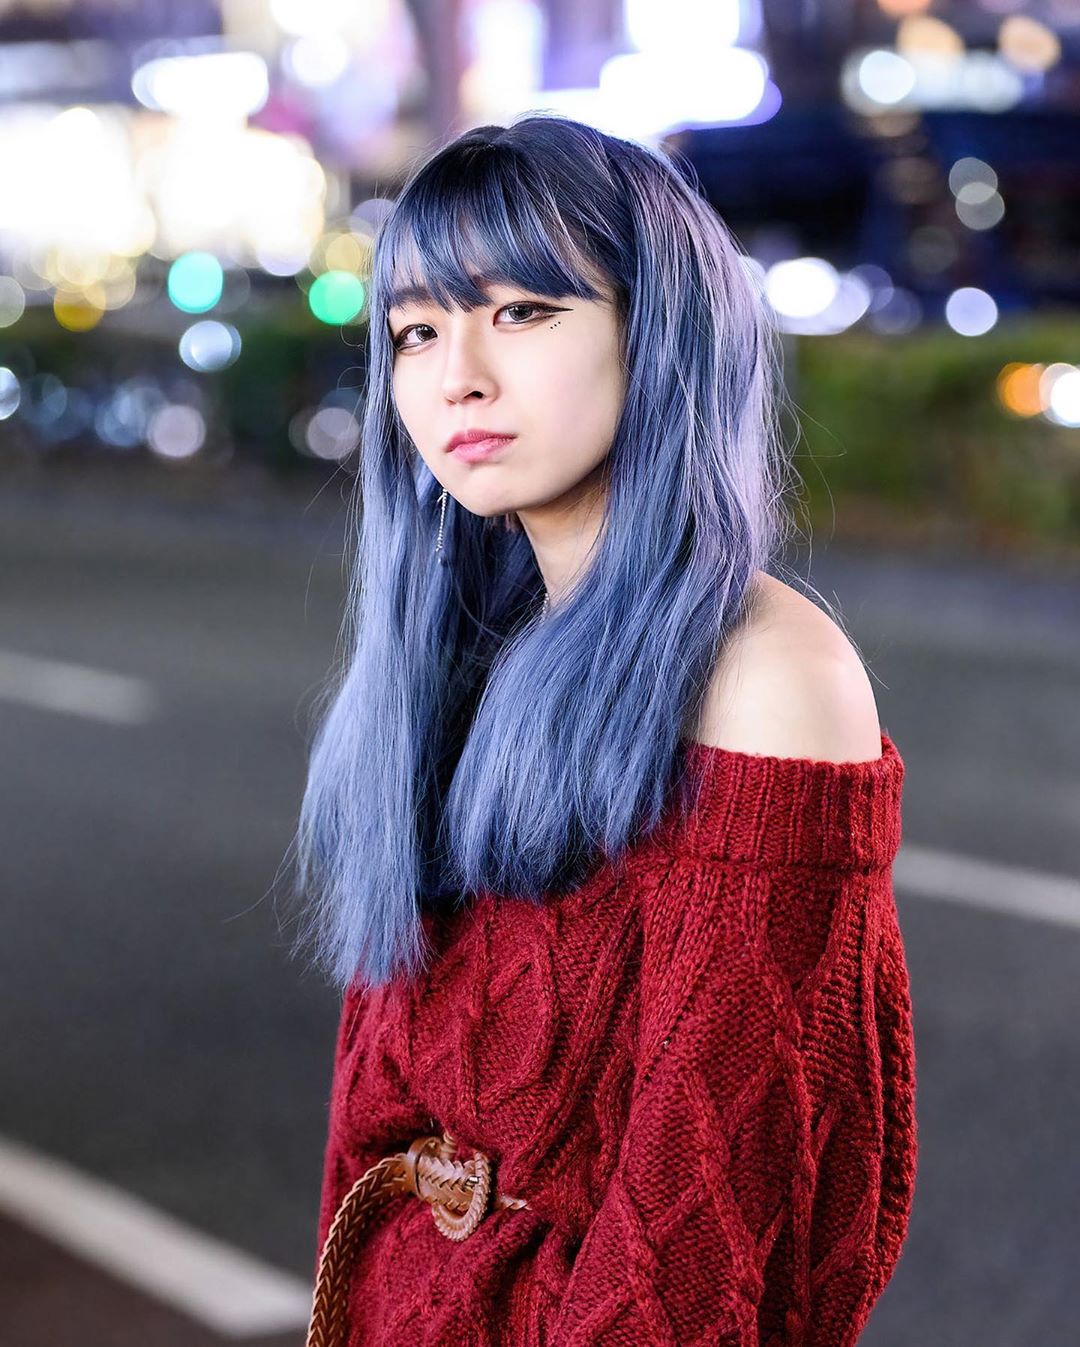 Tokyo Fashion: 18-year-old Japanese singer and shop staff Chibisuke